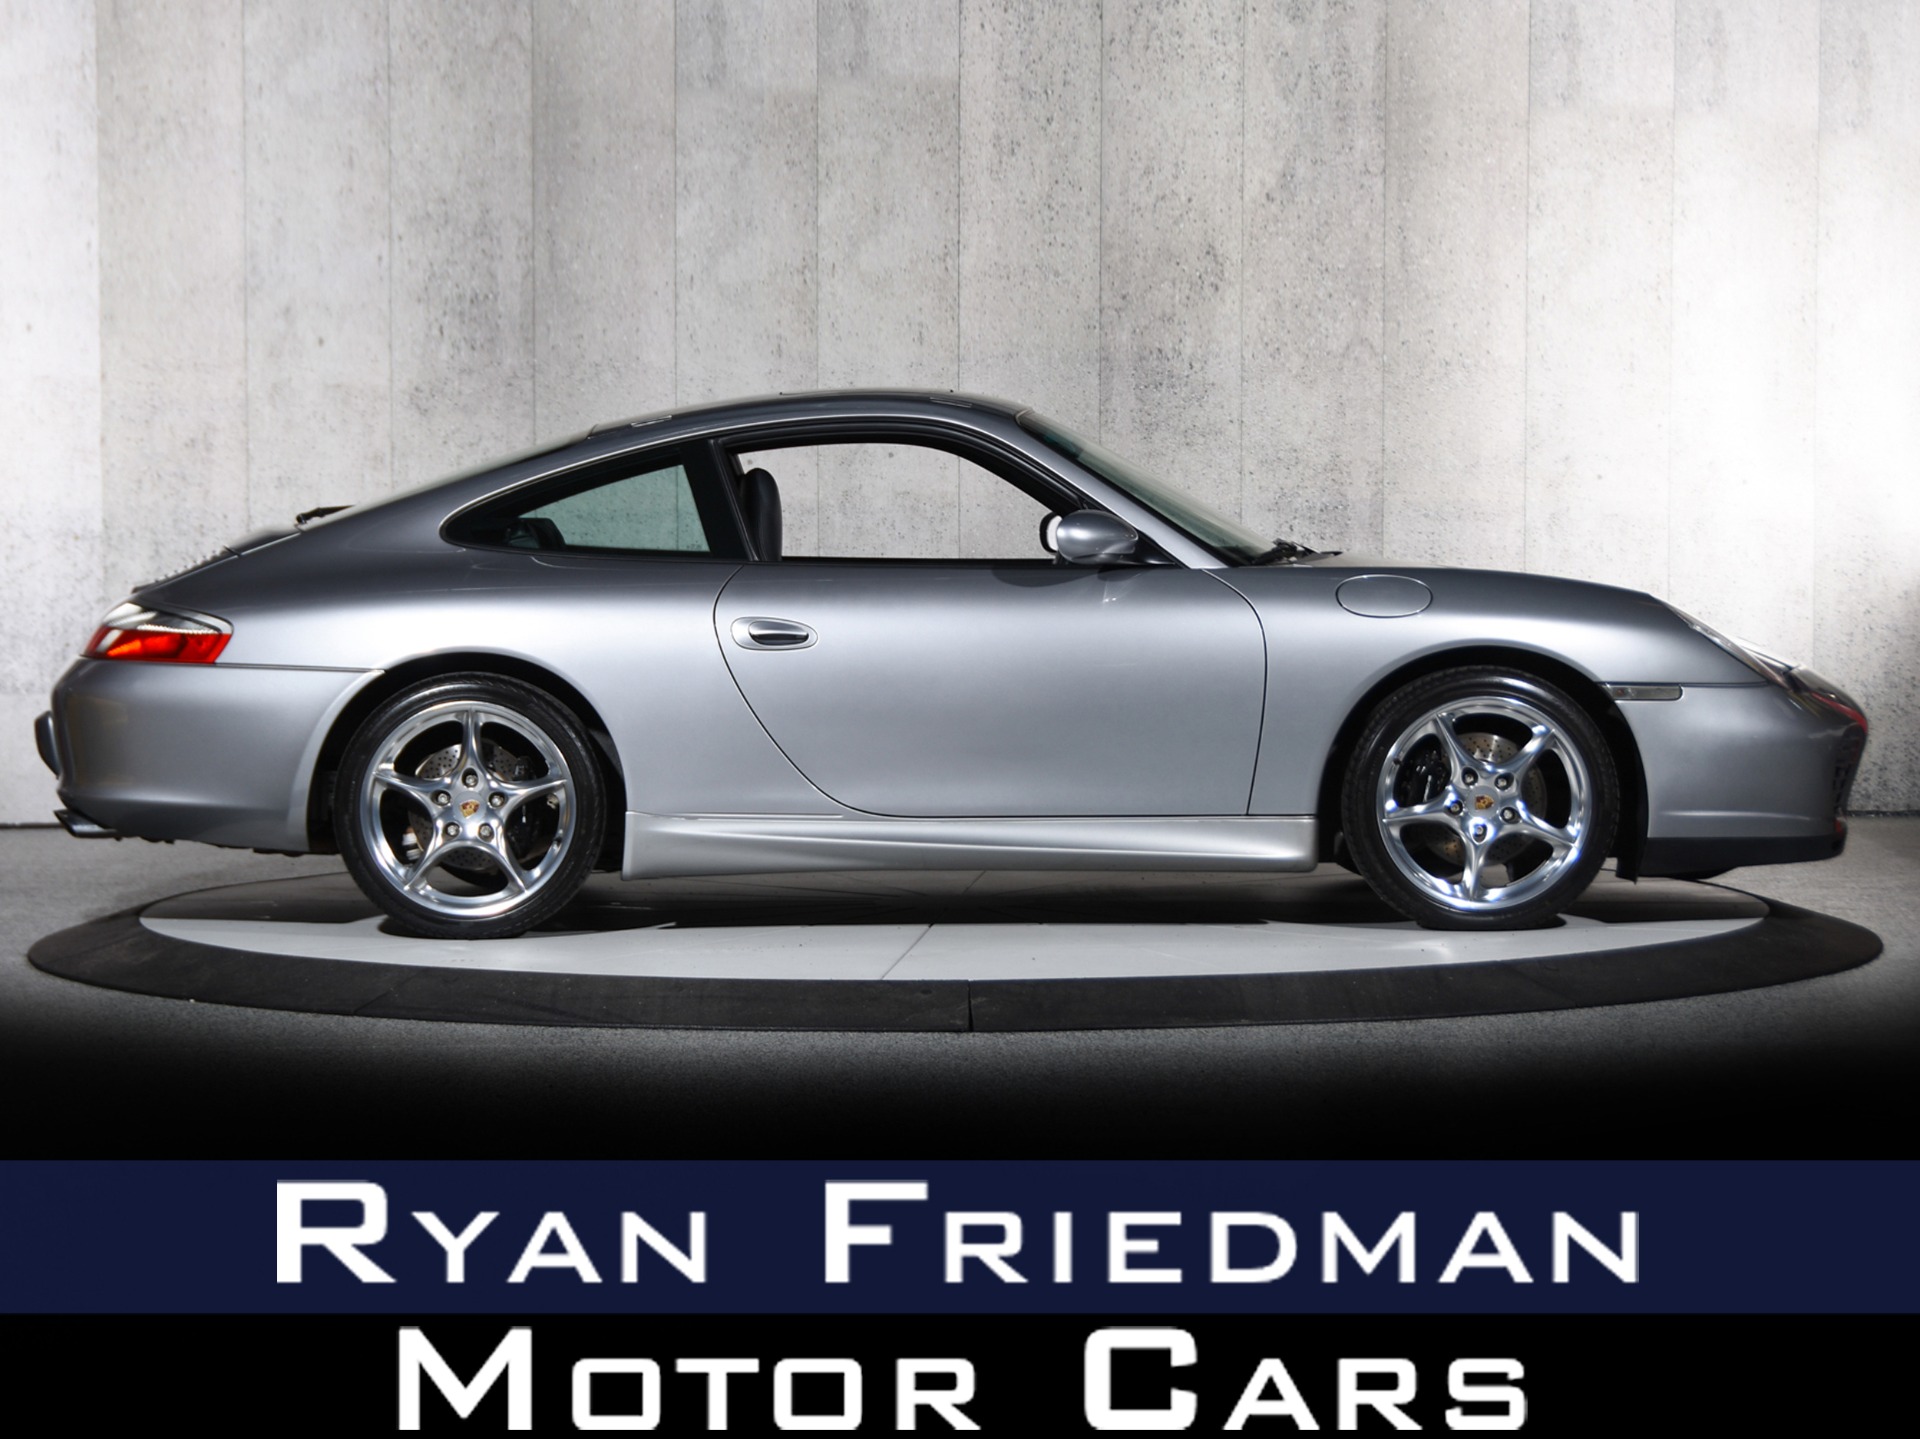 Used 2004 Porsche 911 Cars Ryan Anniversary Sale | Motor LLC Carrera Stock 40th For #1351 Edition (Sold) Friedman